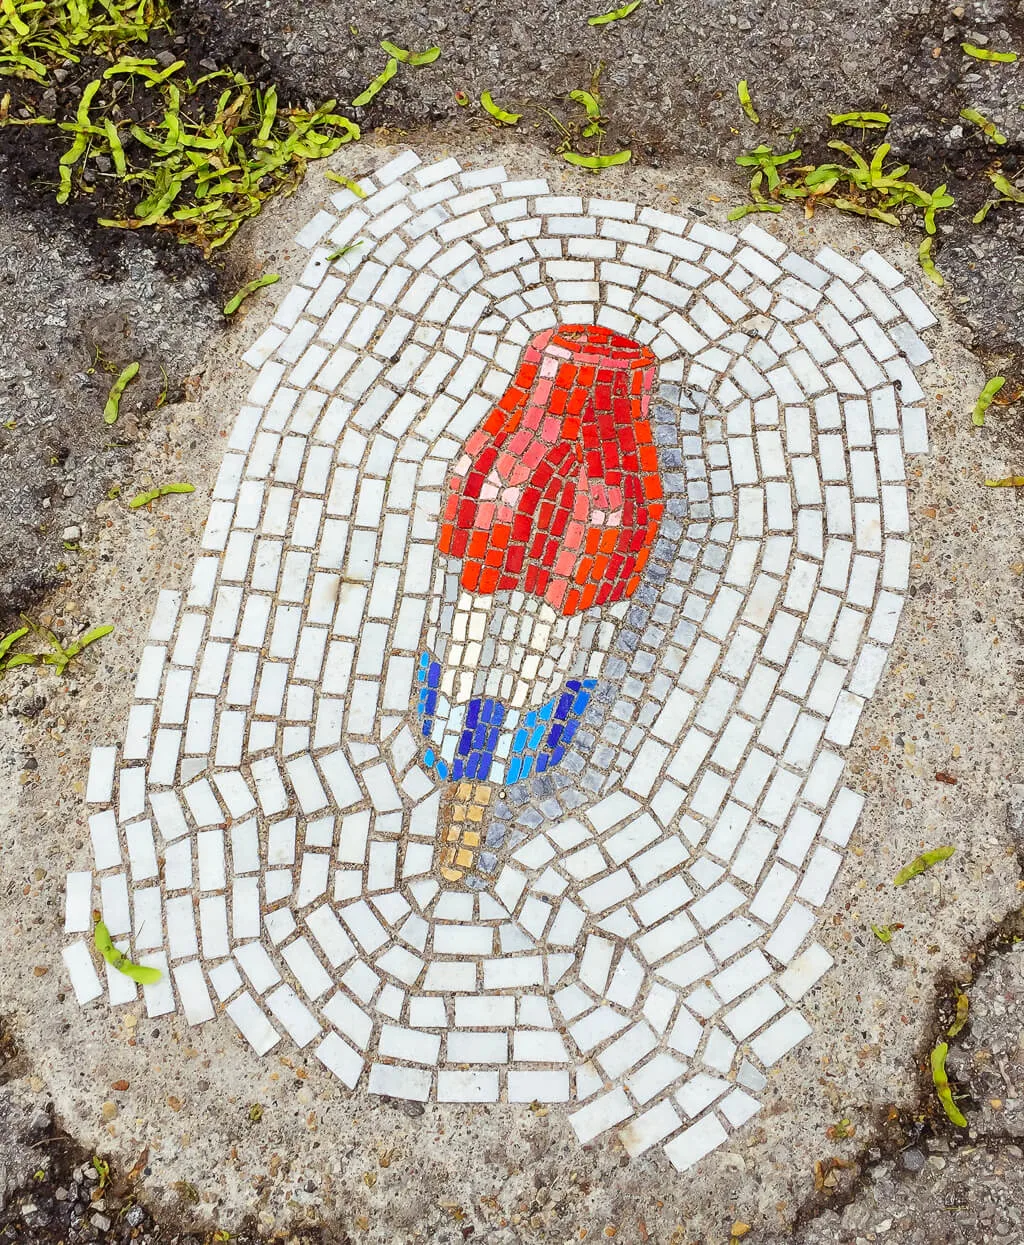 Bomb Pop pothole art by Jim Bachor